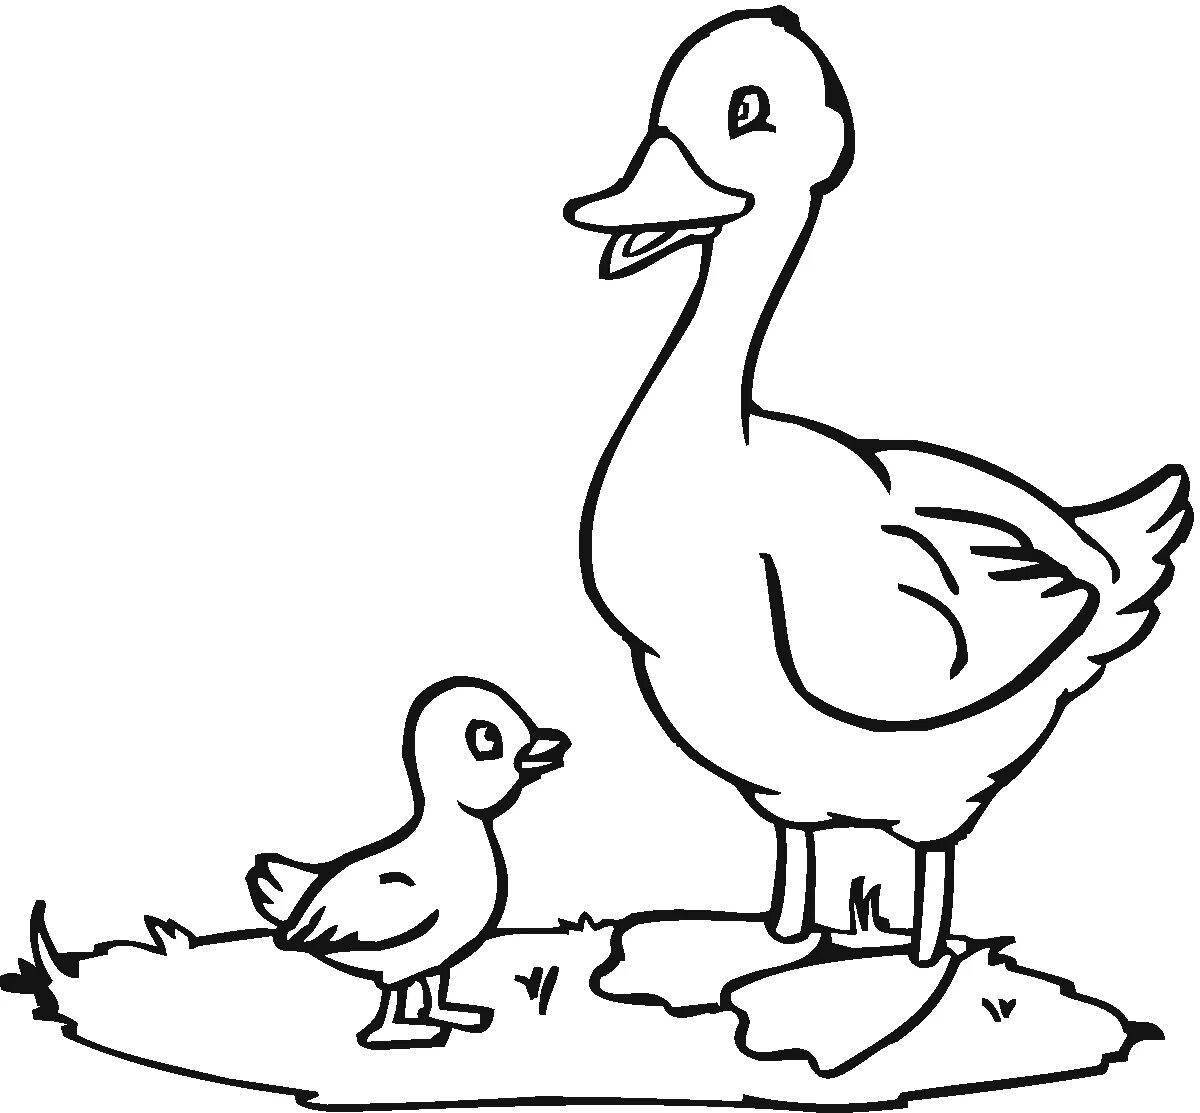 Coloring book joyful duck and duckling